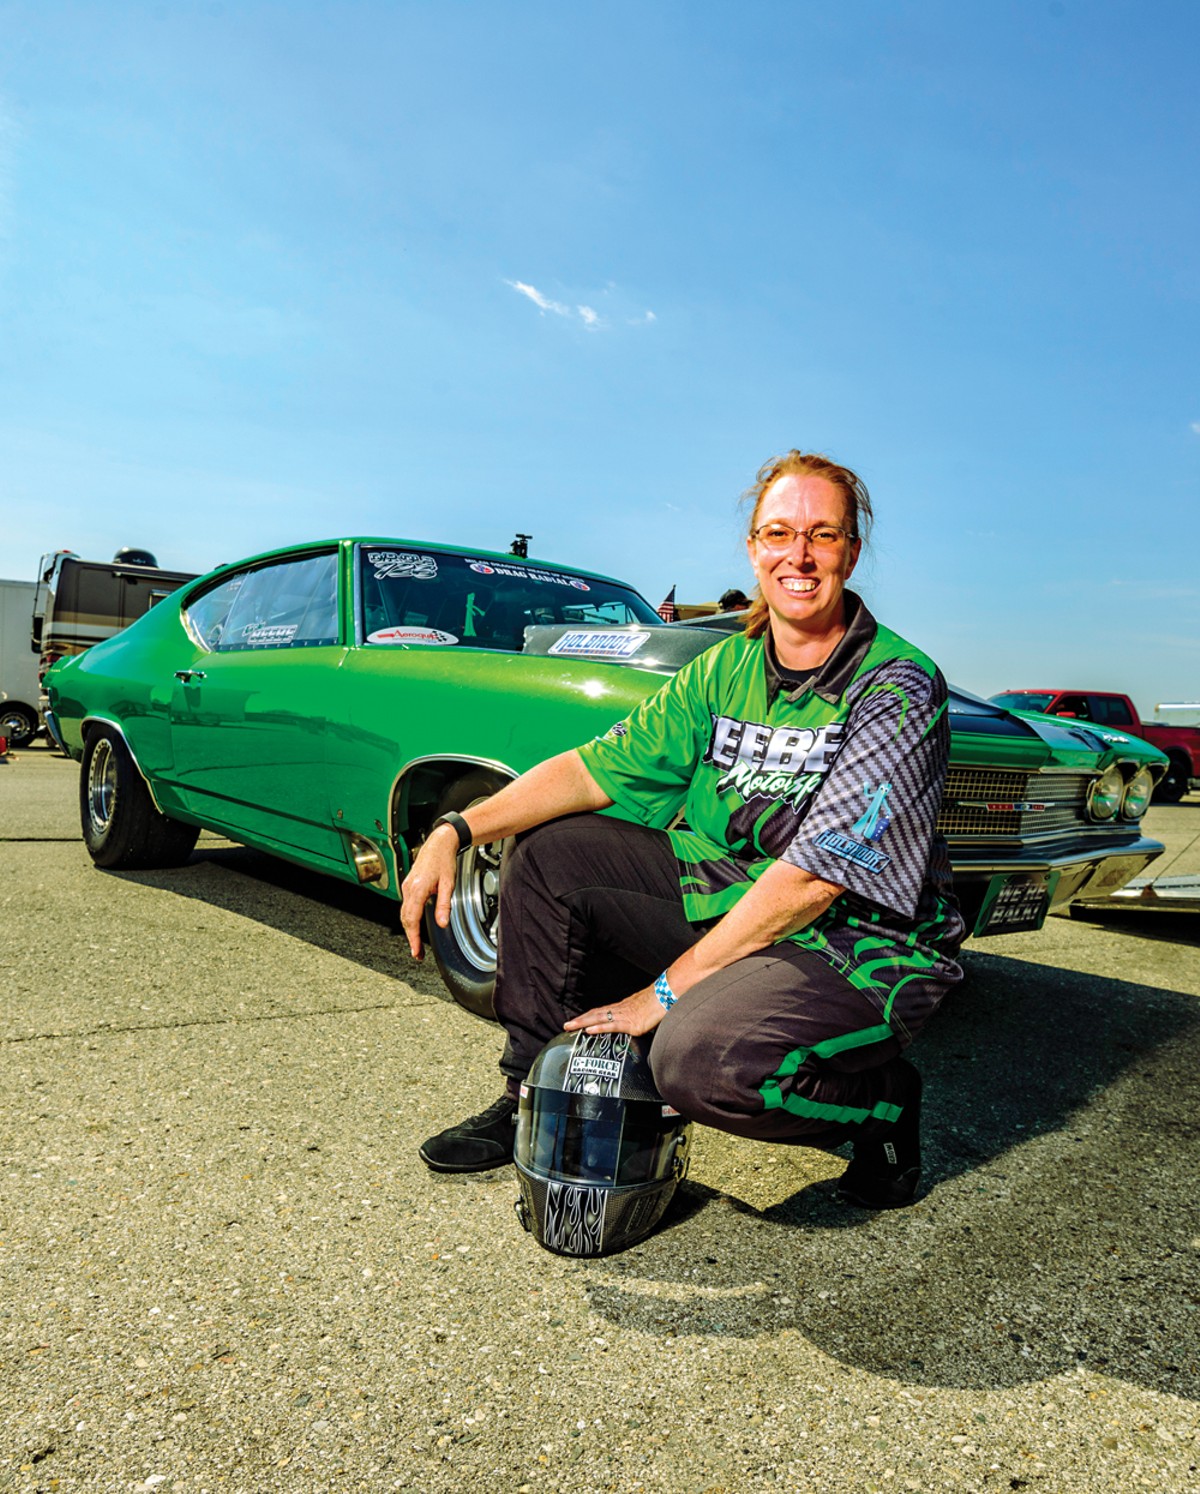 Speed queen: Meet Karri Anne Beebe, the fastest woman in Michigan